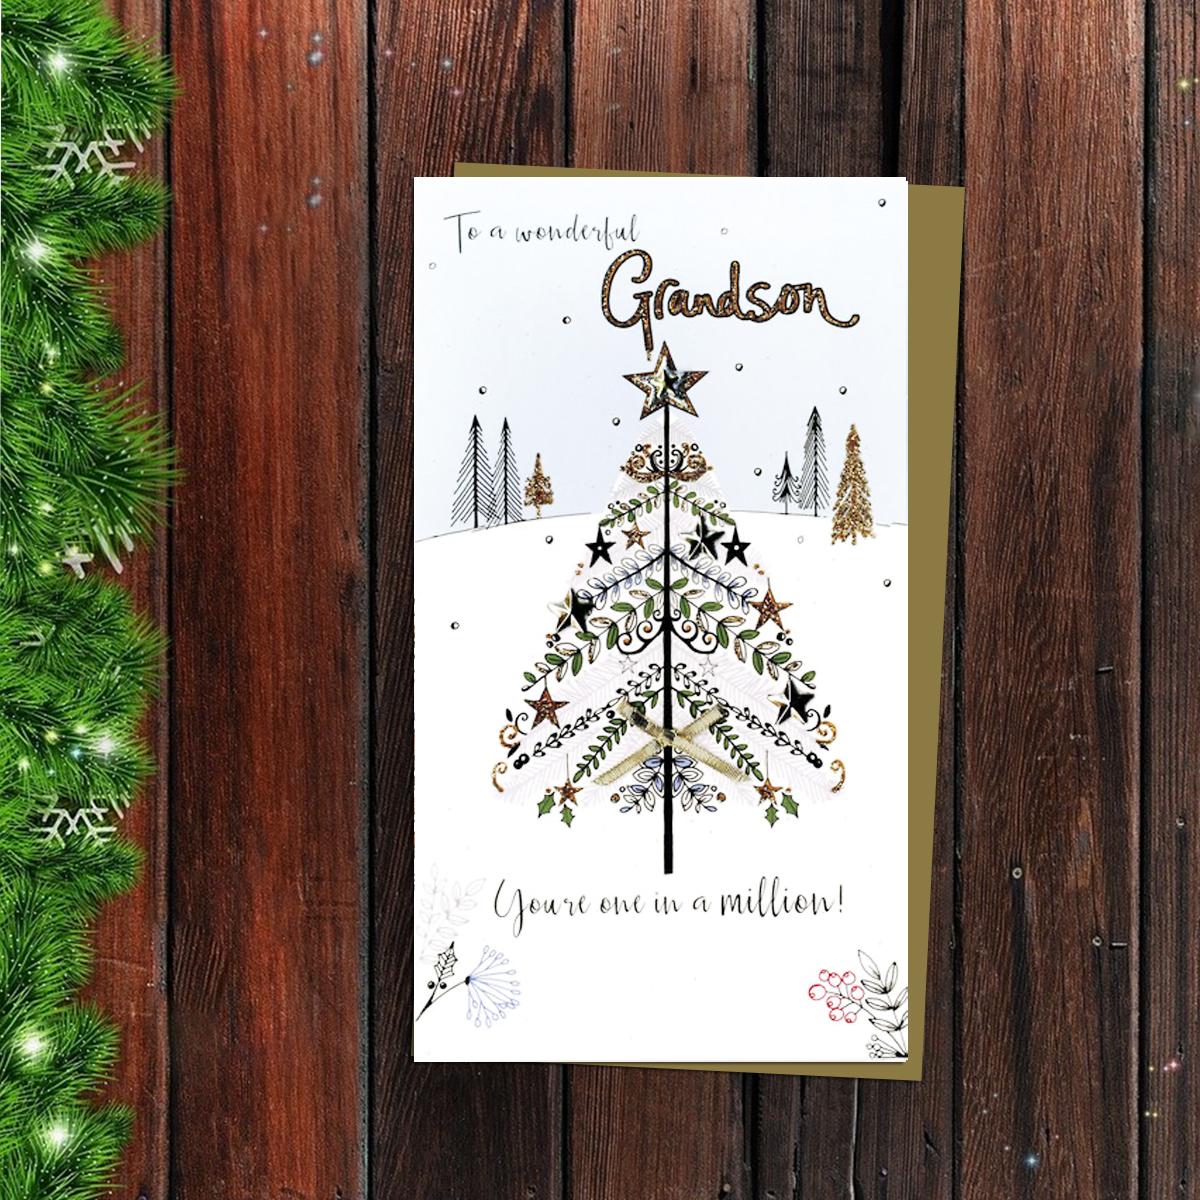 Grandson Christmas Card Alongside Its Gold Envelope